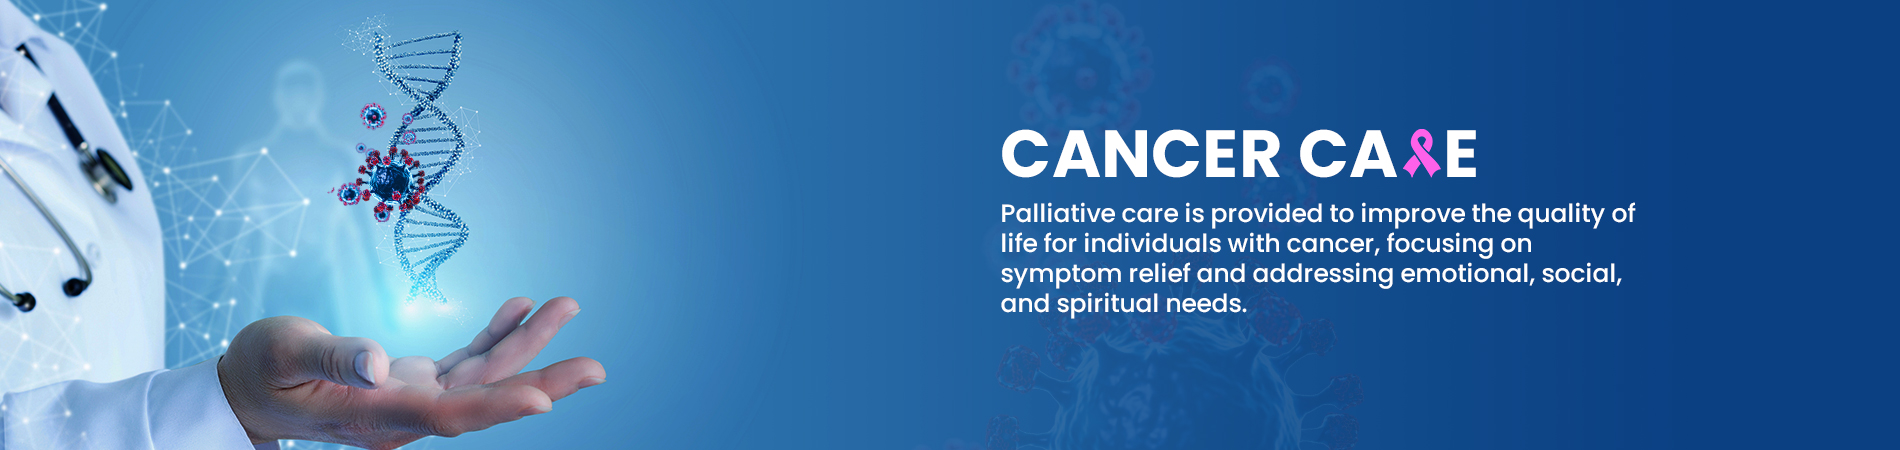 cancer-care-banner